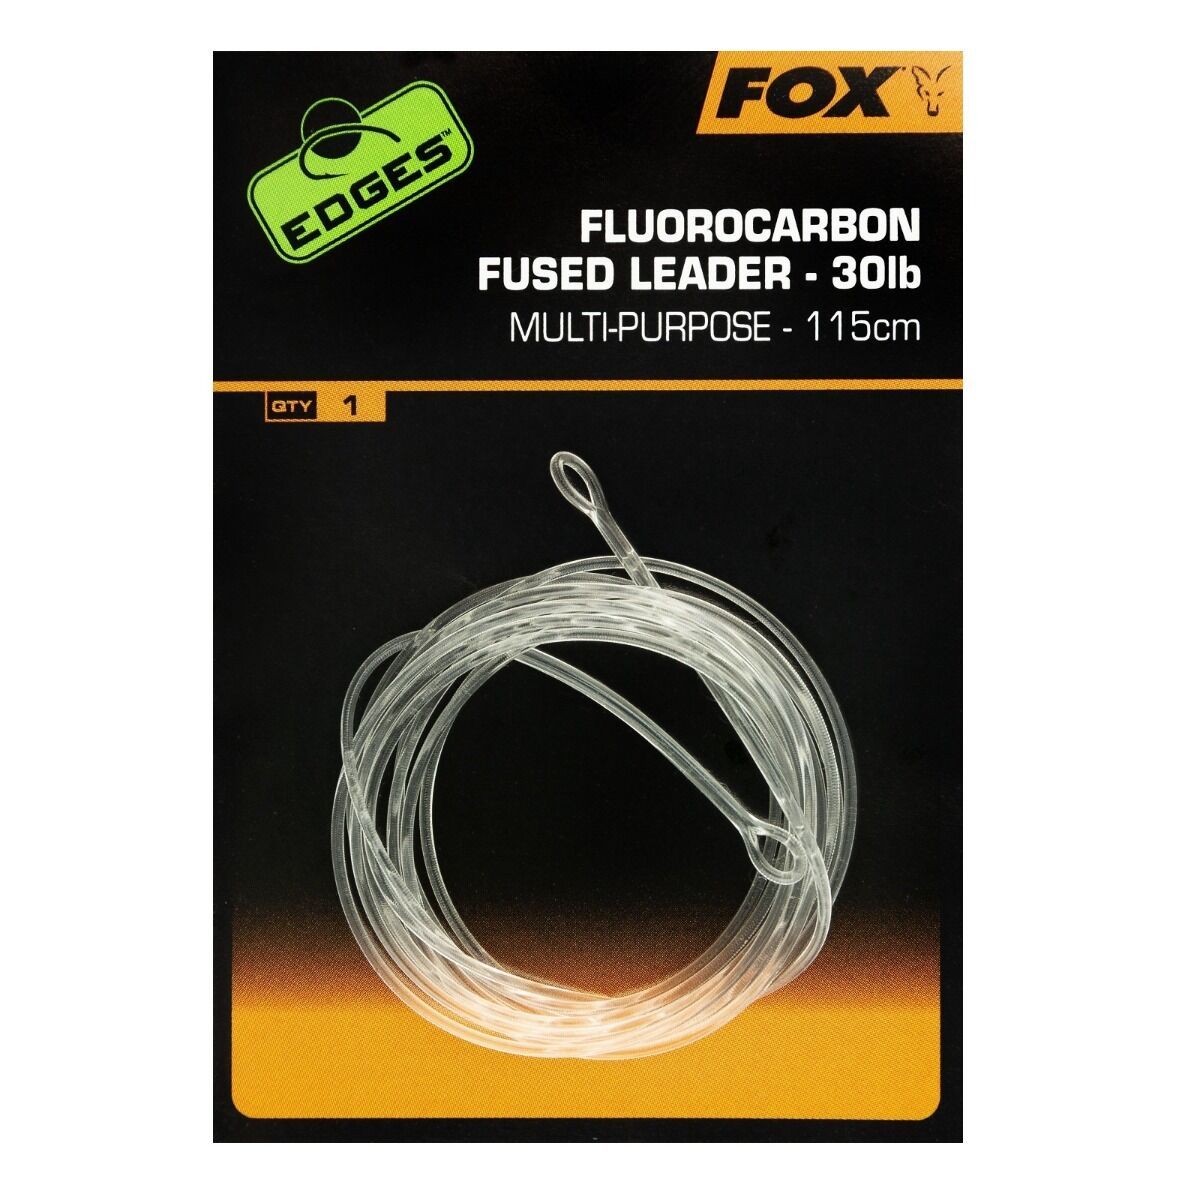 Fox Fluorocarbon Fused Leader 30lb Multi purpose 115cm cac720 